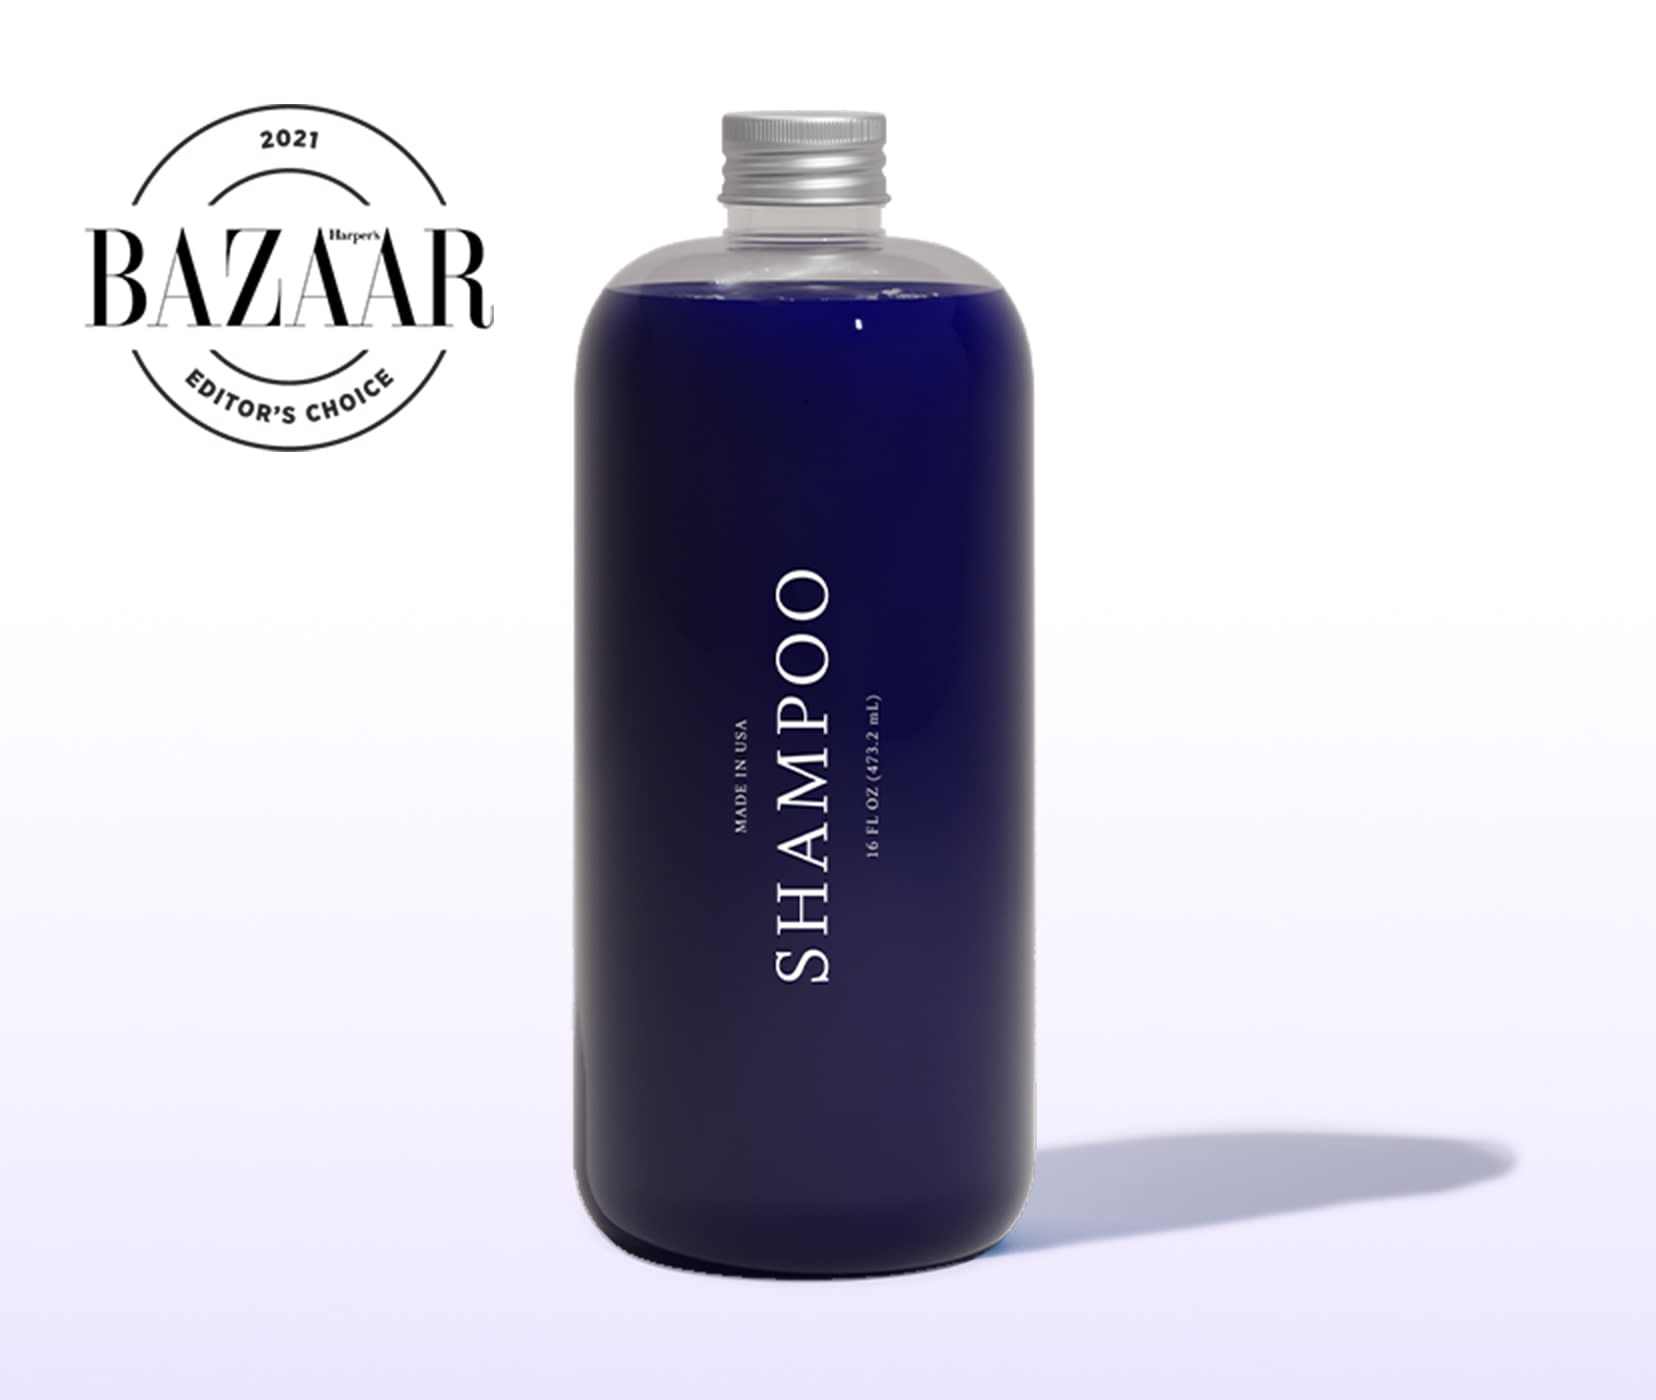 Customized Purple Shampoo shown with Harpers Bazaar Editor's Choice award badge. 